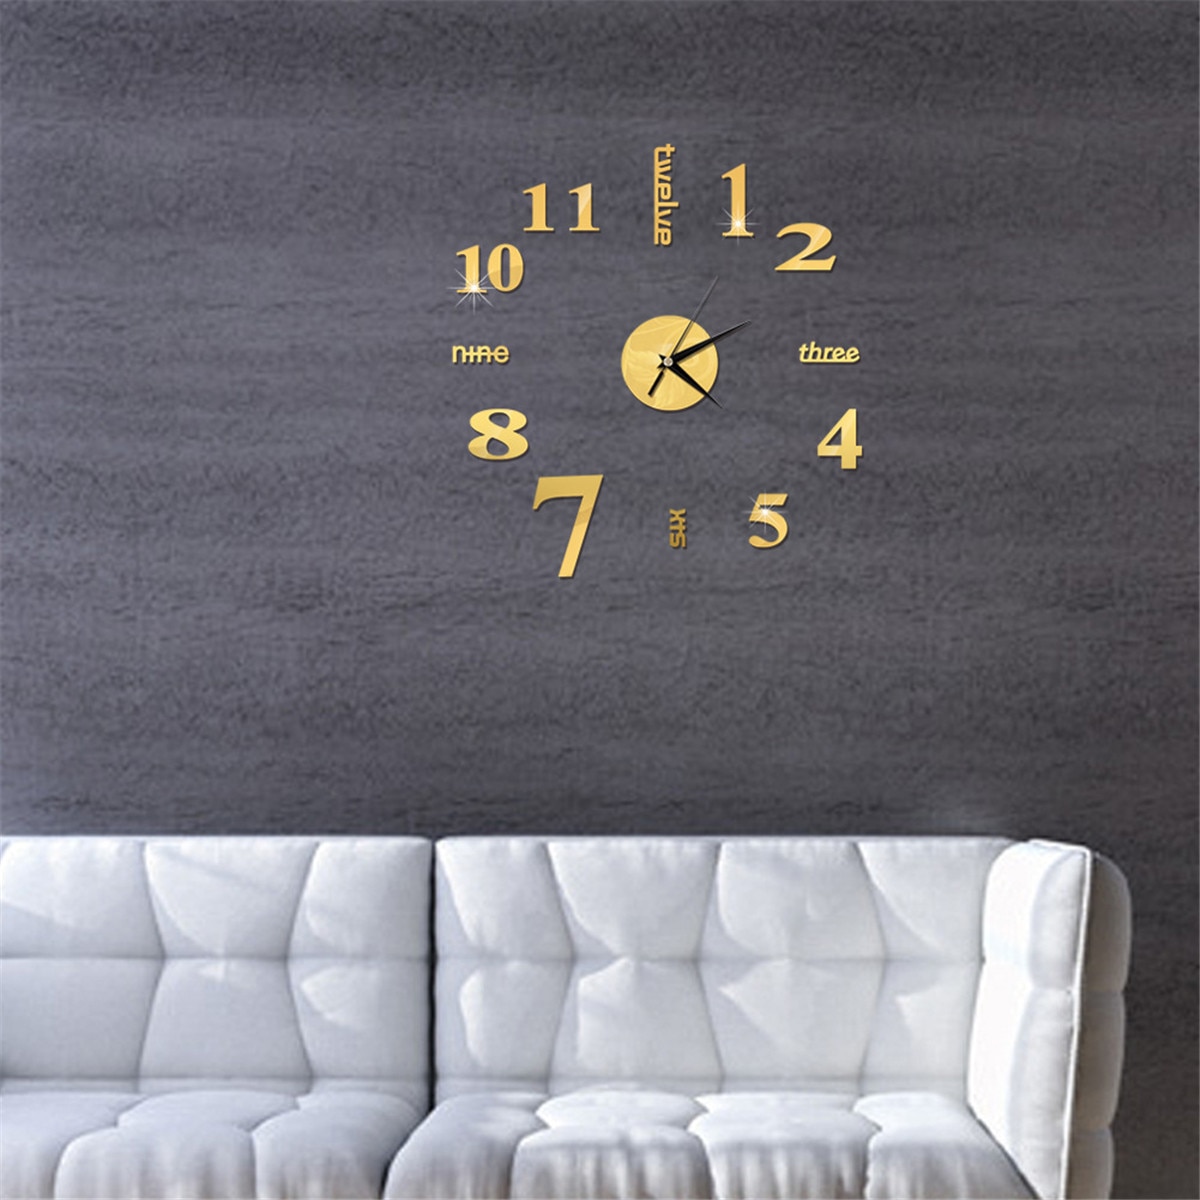 3D Wall Clock Mirror Wall Stickers Creative DIY Wall Clocks Removable Art Decal Sticker Home Decor Living Room Quartz Needle Hot